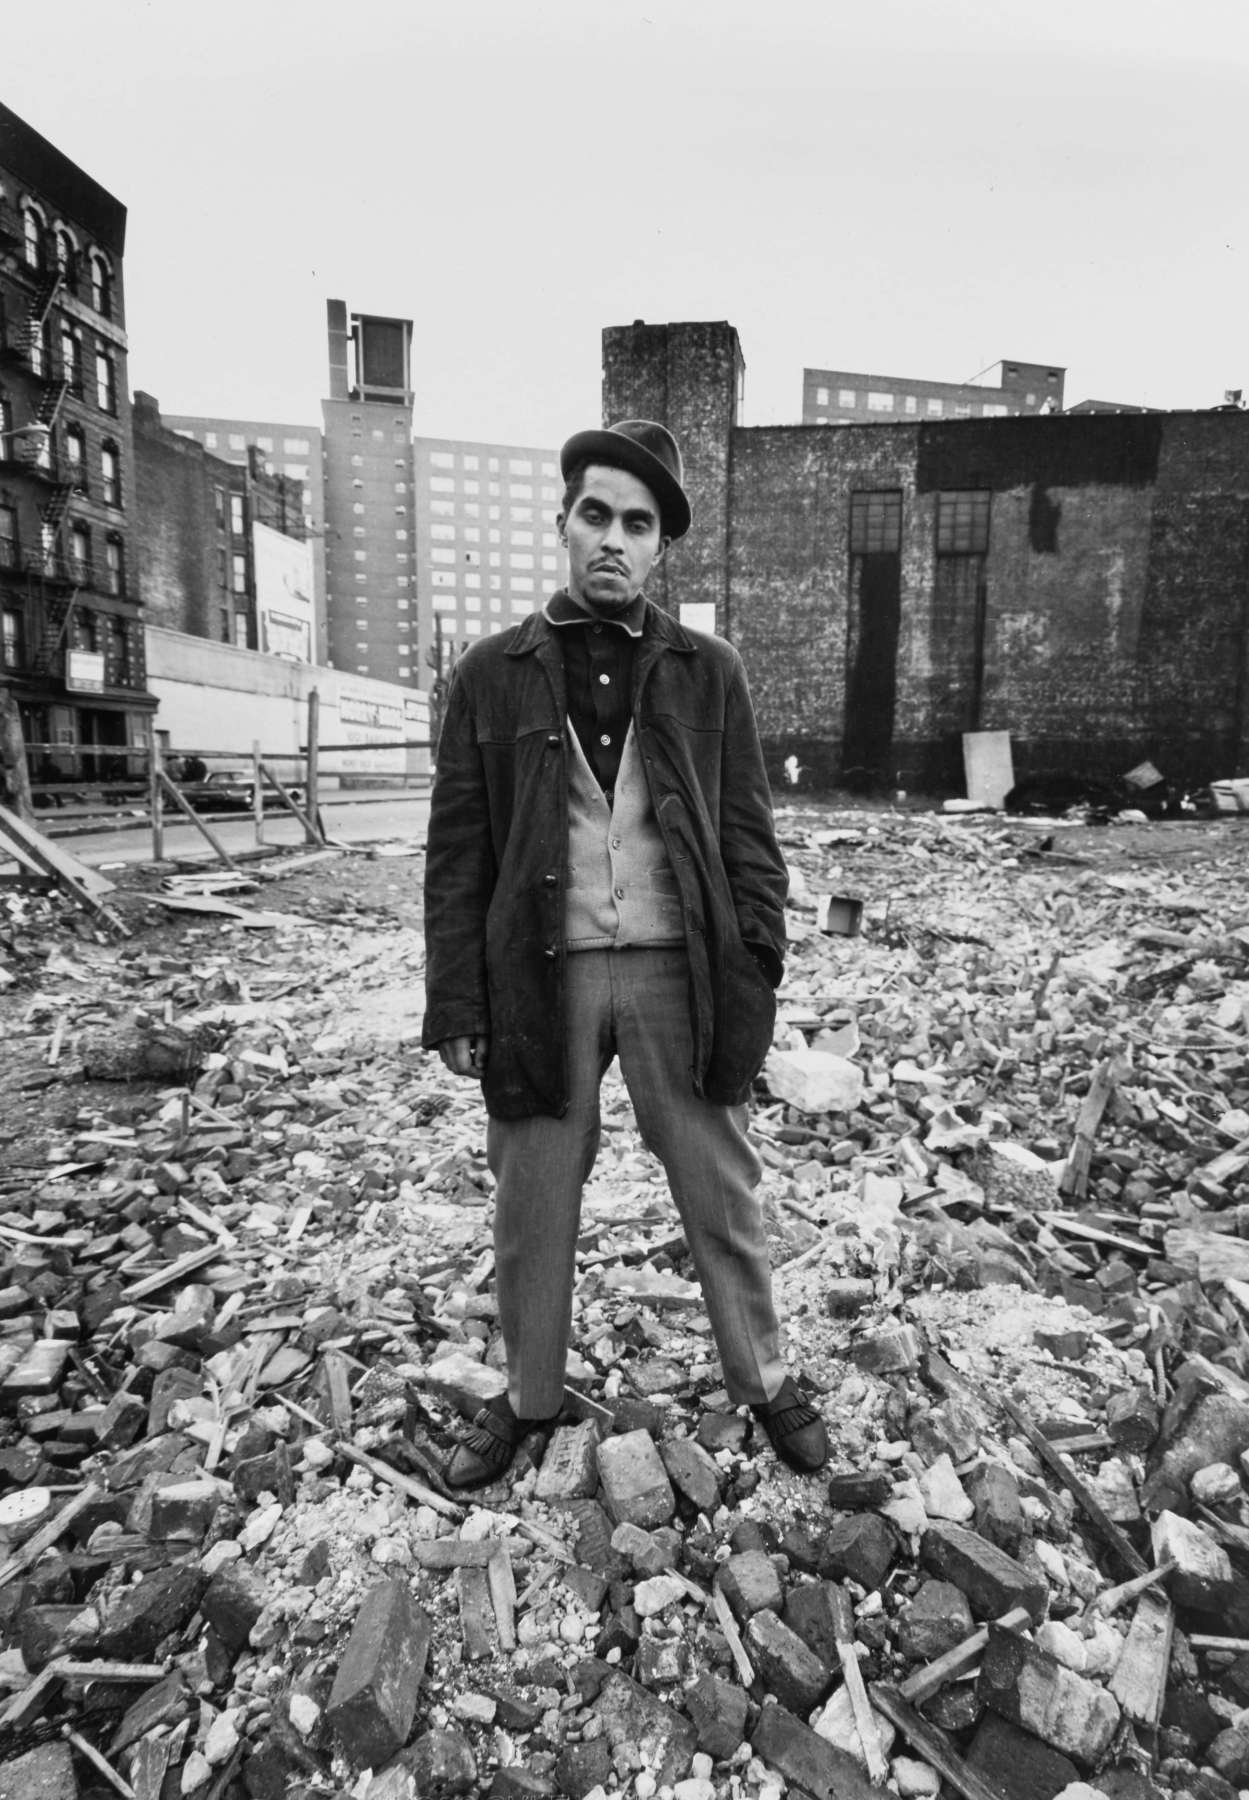 Bruce Davidson, Unaltd, East 100th Street, New York, 1966